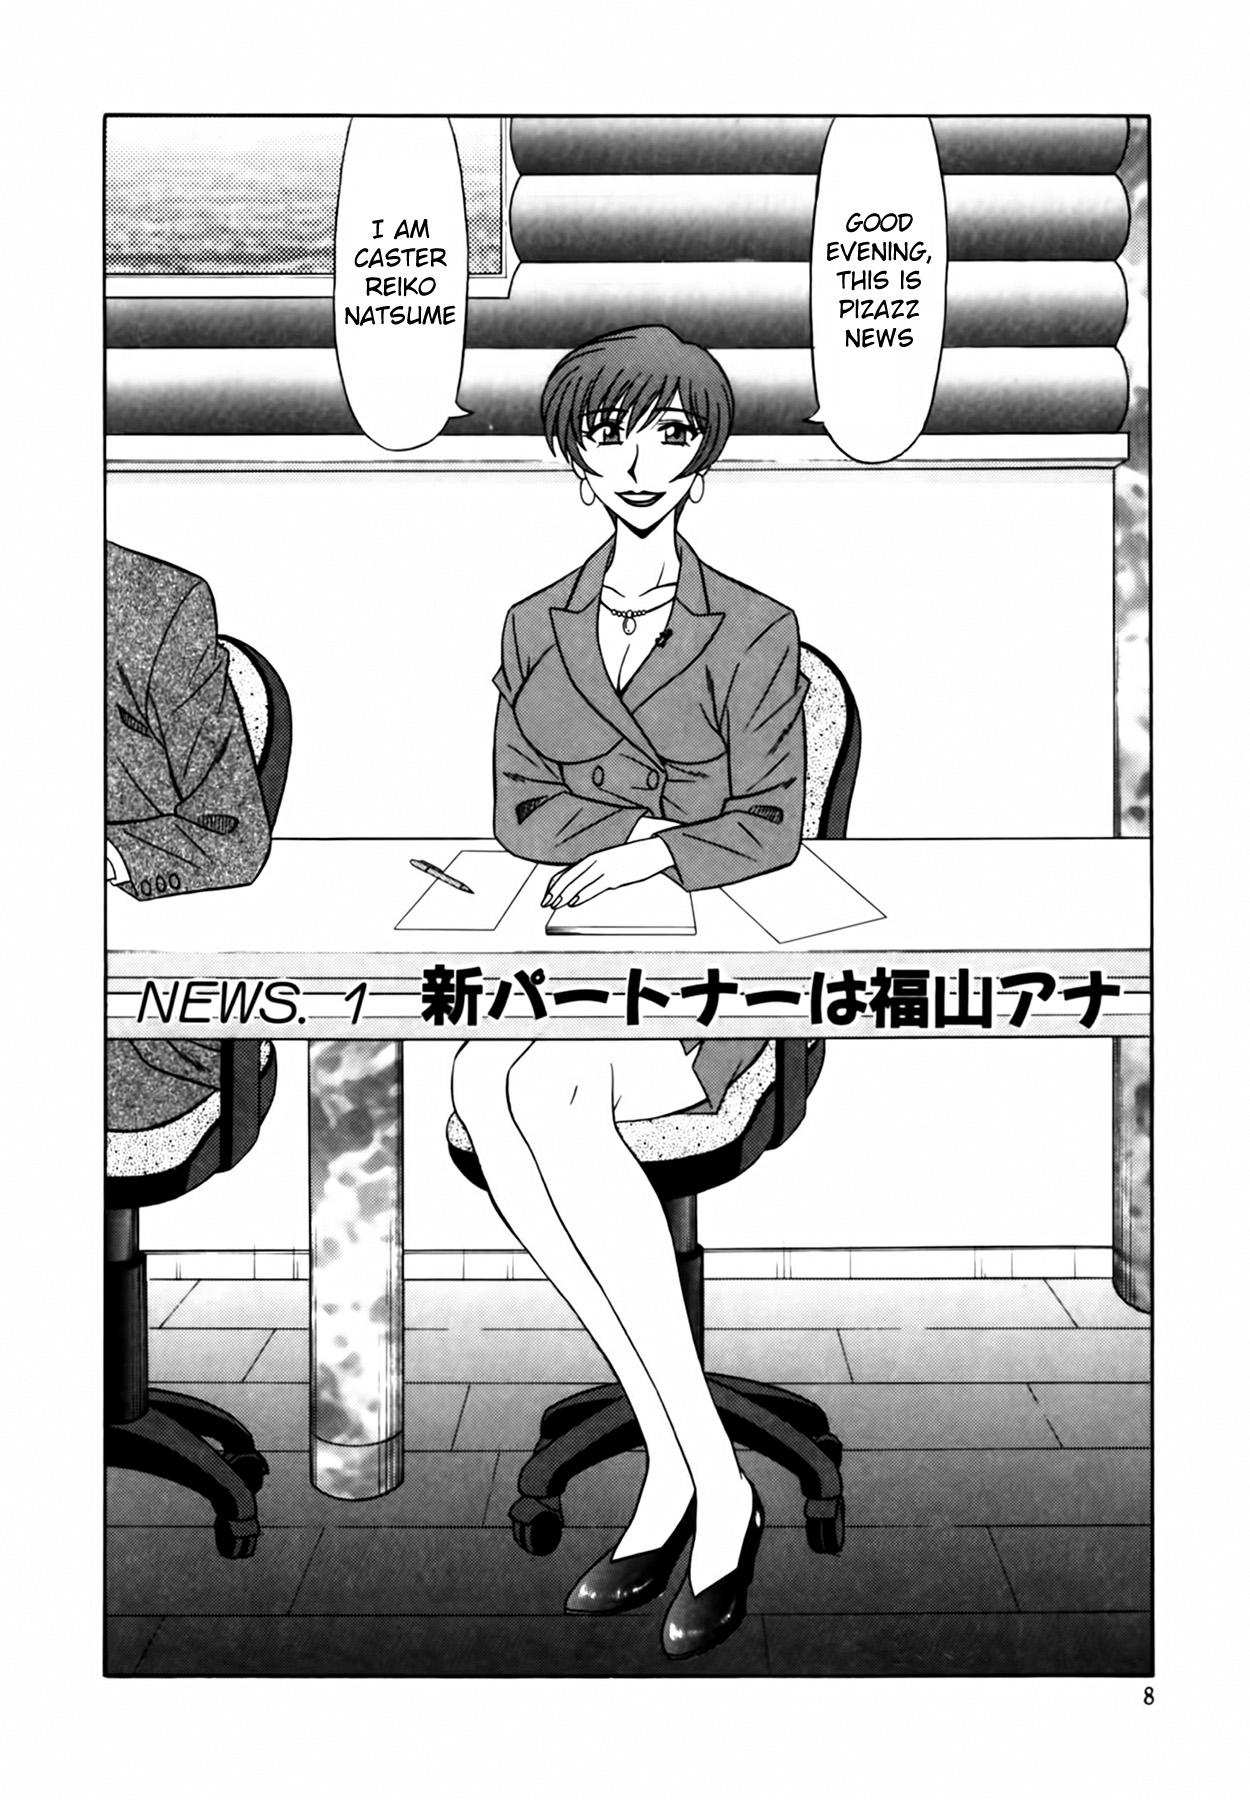 Toilet Caster Natsume Reiko no Yuuwaku Vol. 1 Ch.1 Picked Up - Page 8